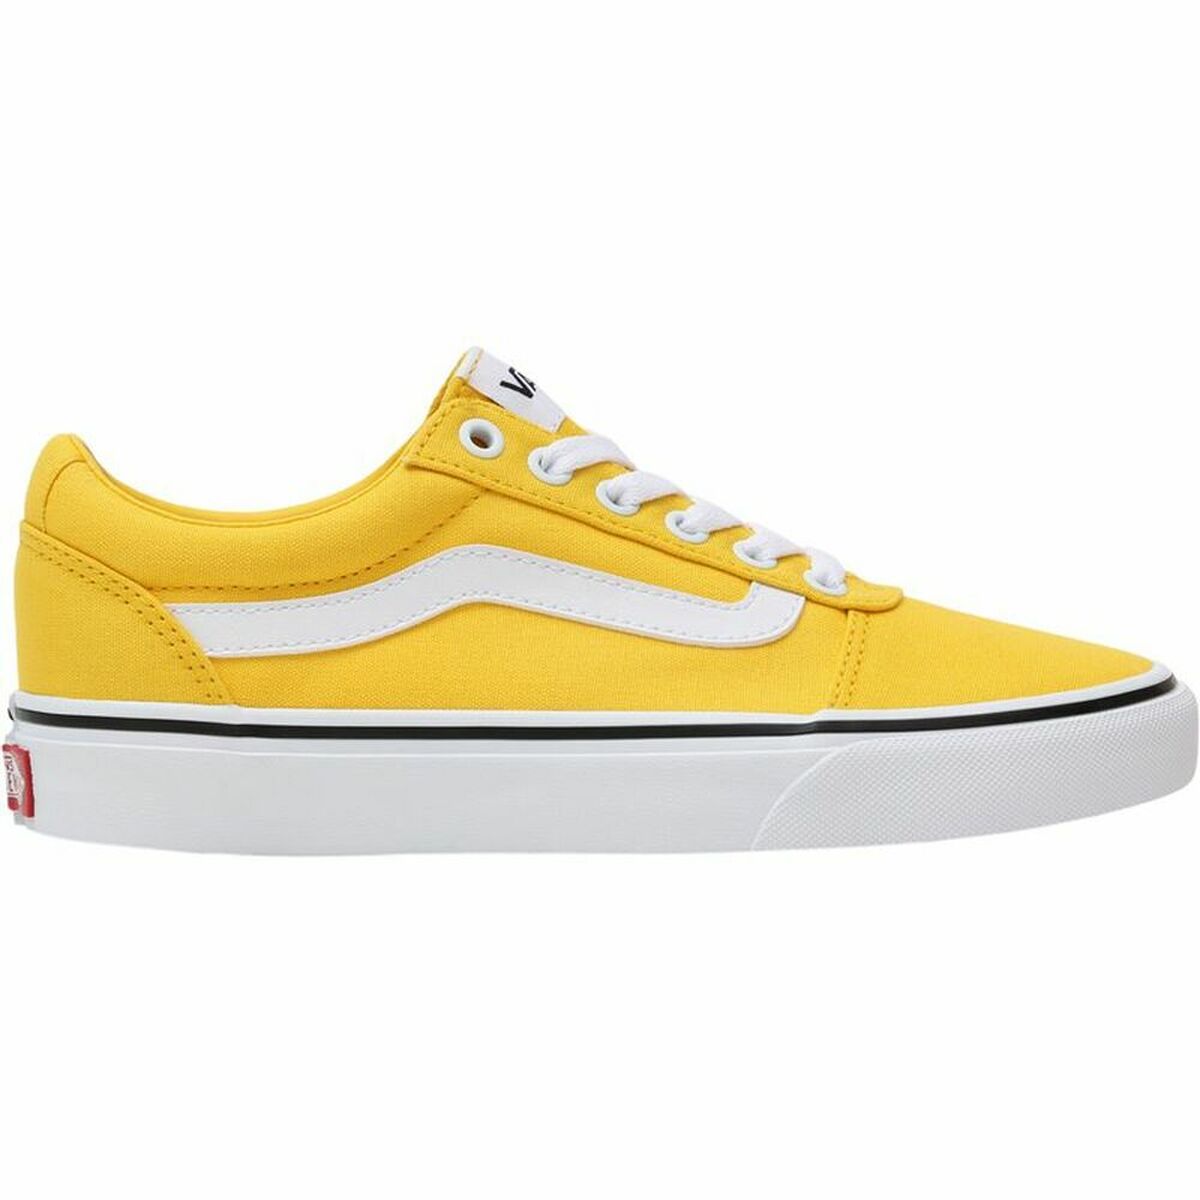 Chaussures casual Vans WM Ward Or jaune